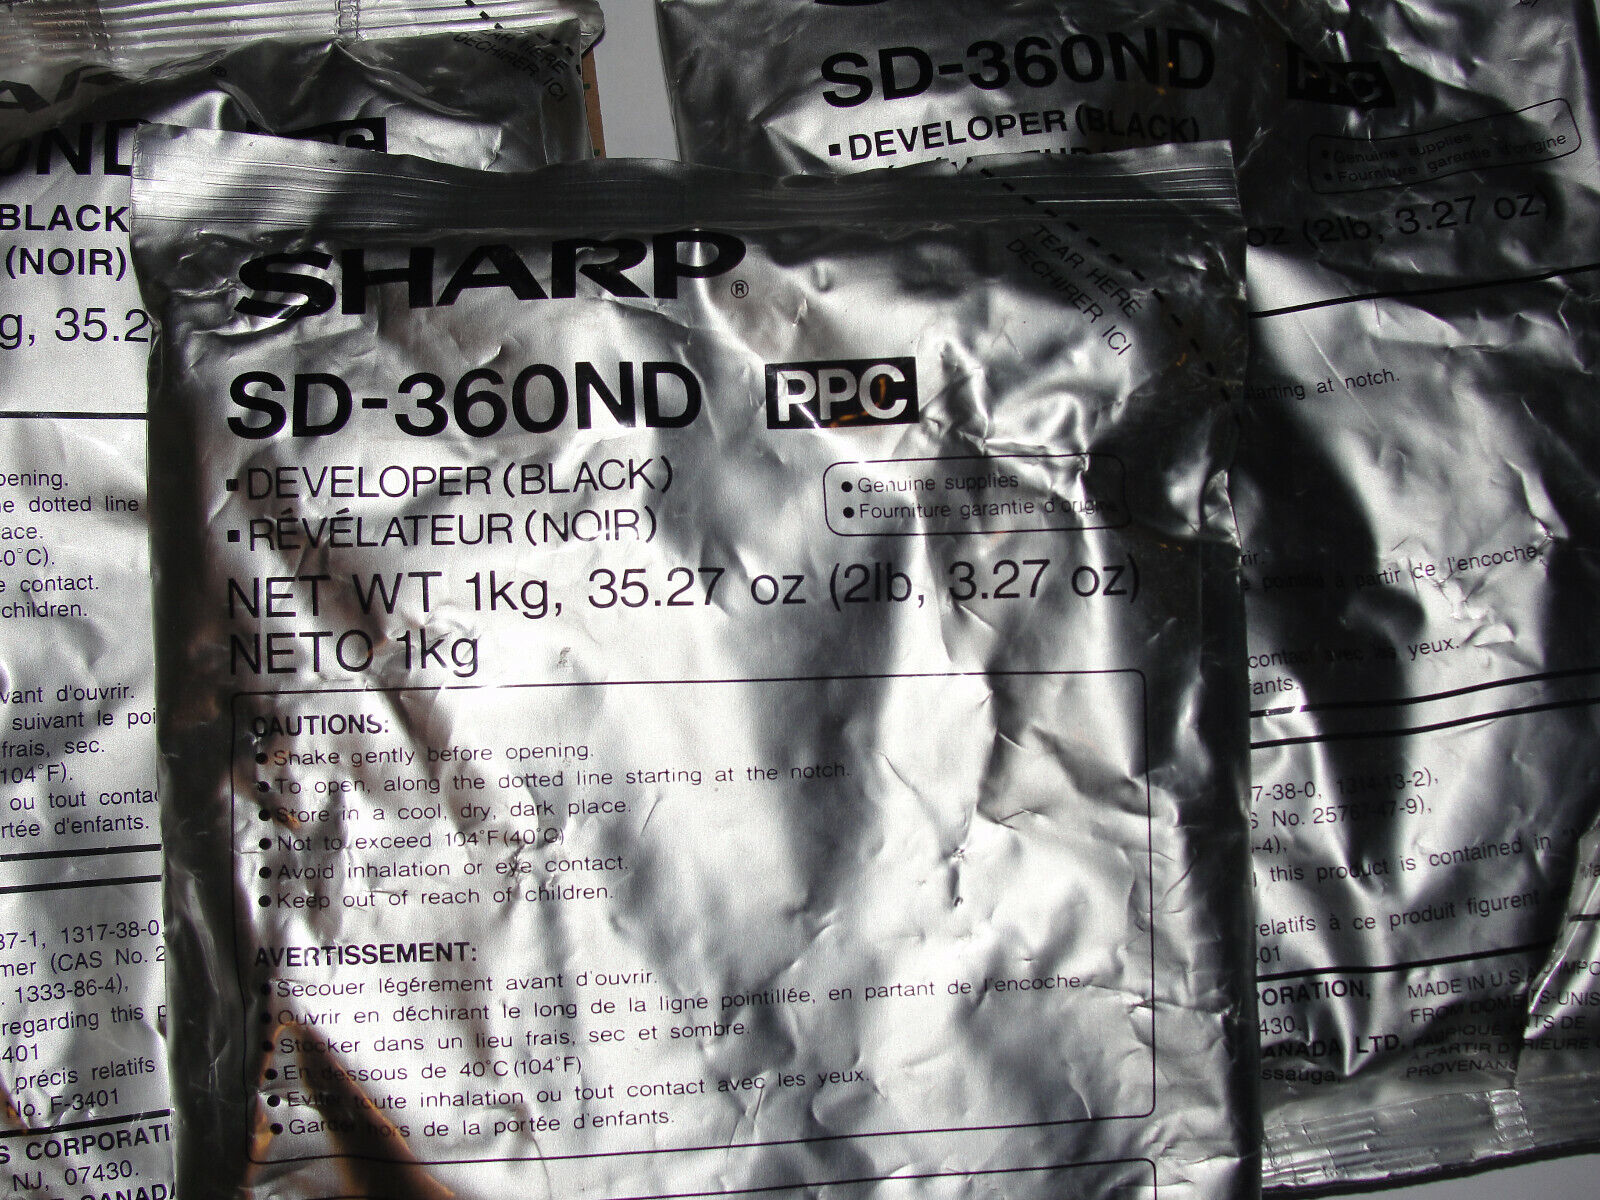 LOT OF 3 SHARP Sharp Model SF-360MD1 Copier Developer SD-360ND NEW! Sharp SD-360ND - фотография #4